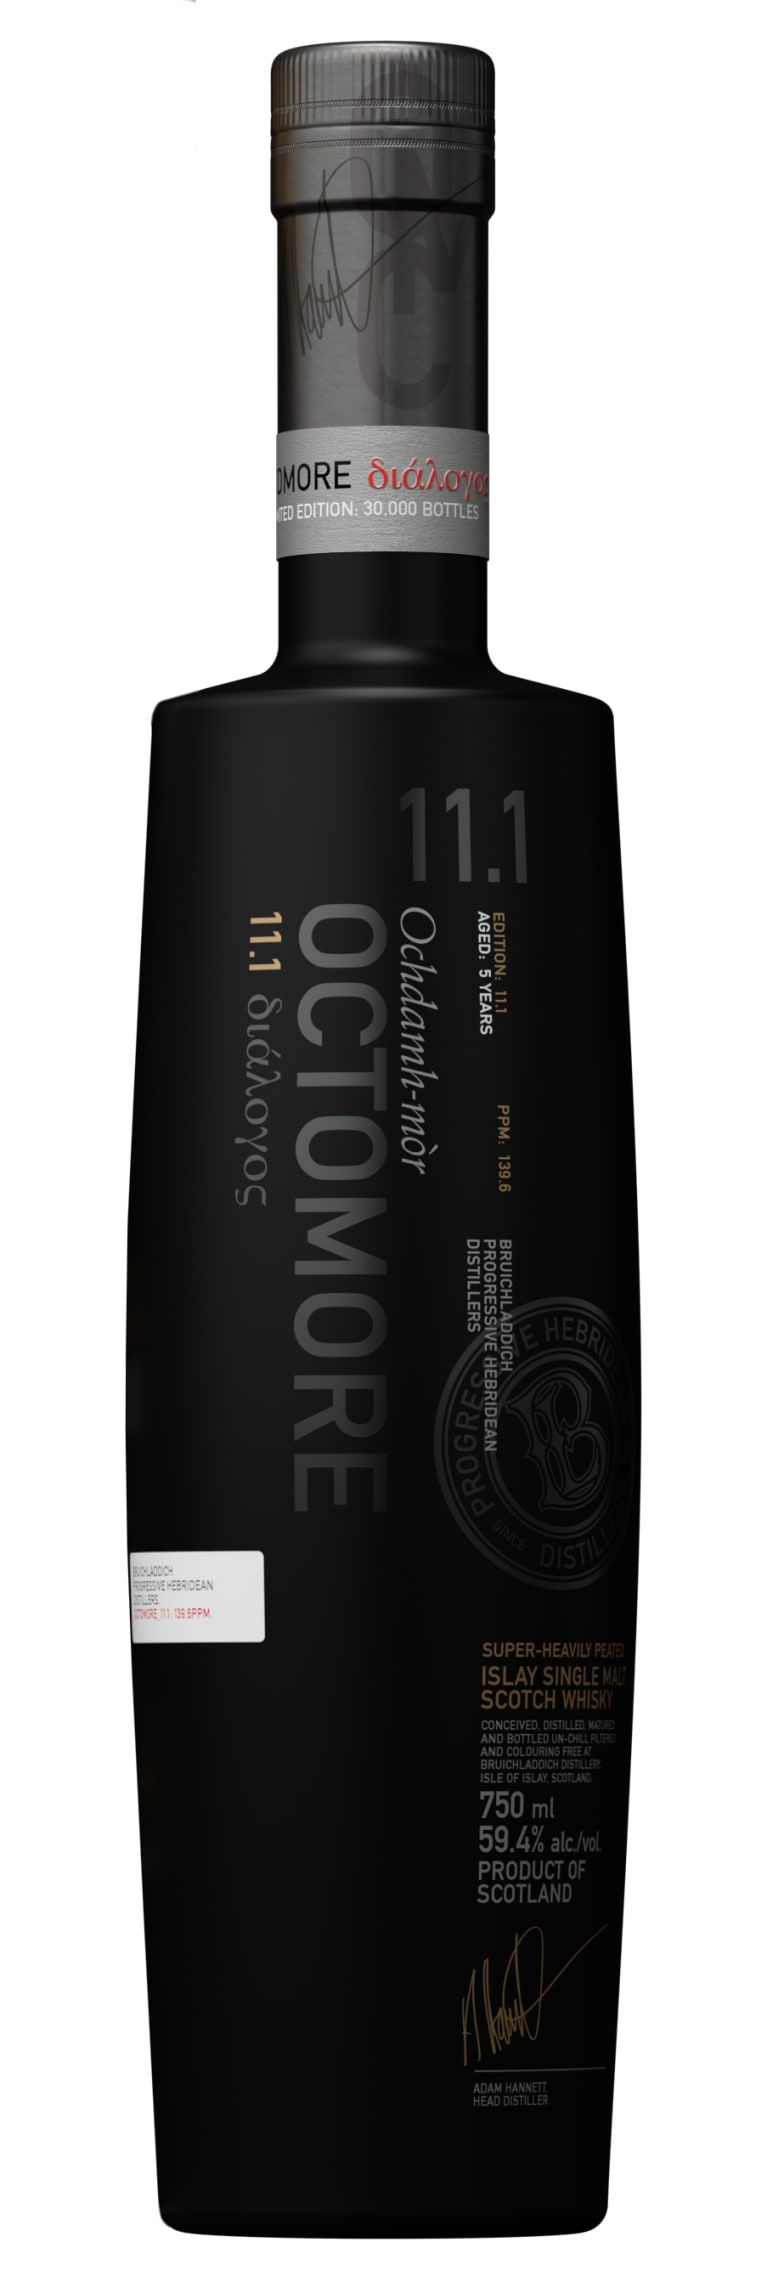 Bruichladdich Octomore 11 1 Single Malt Scotch Whisky Wine Com